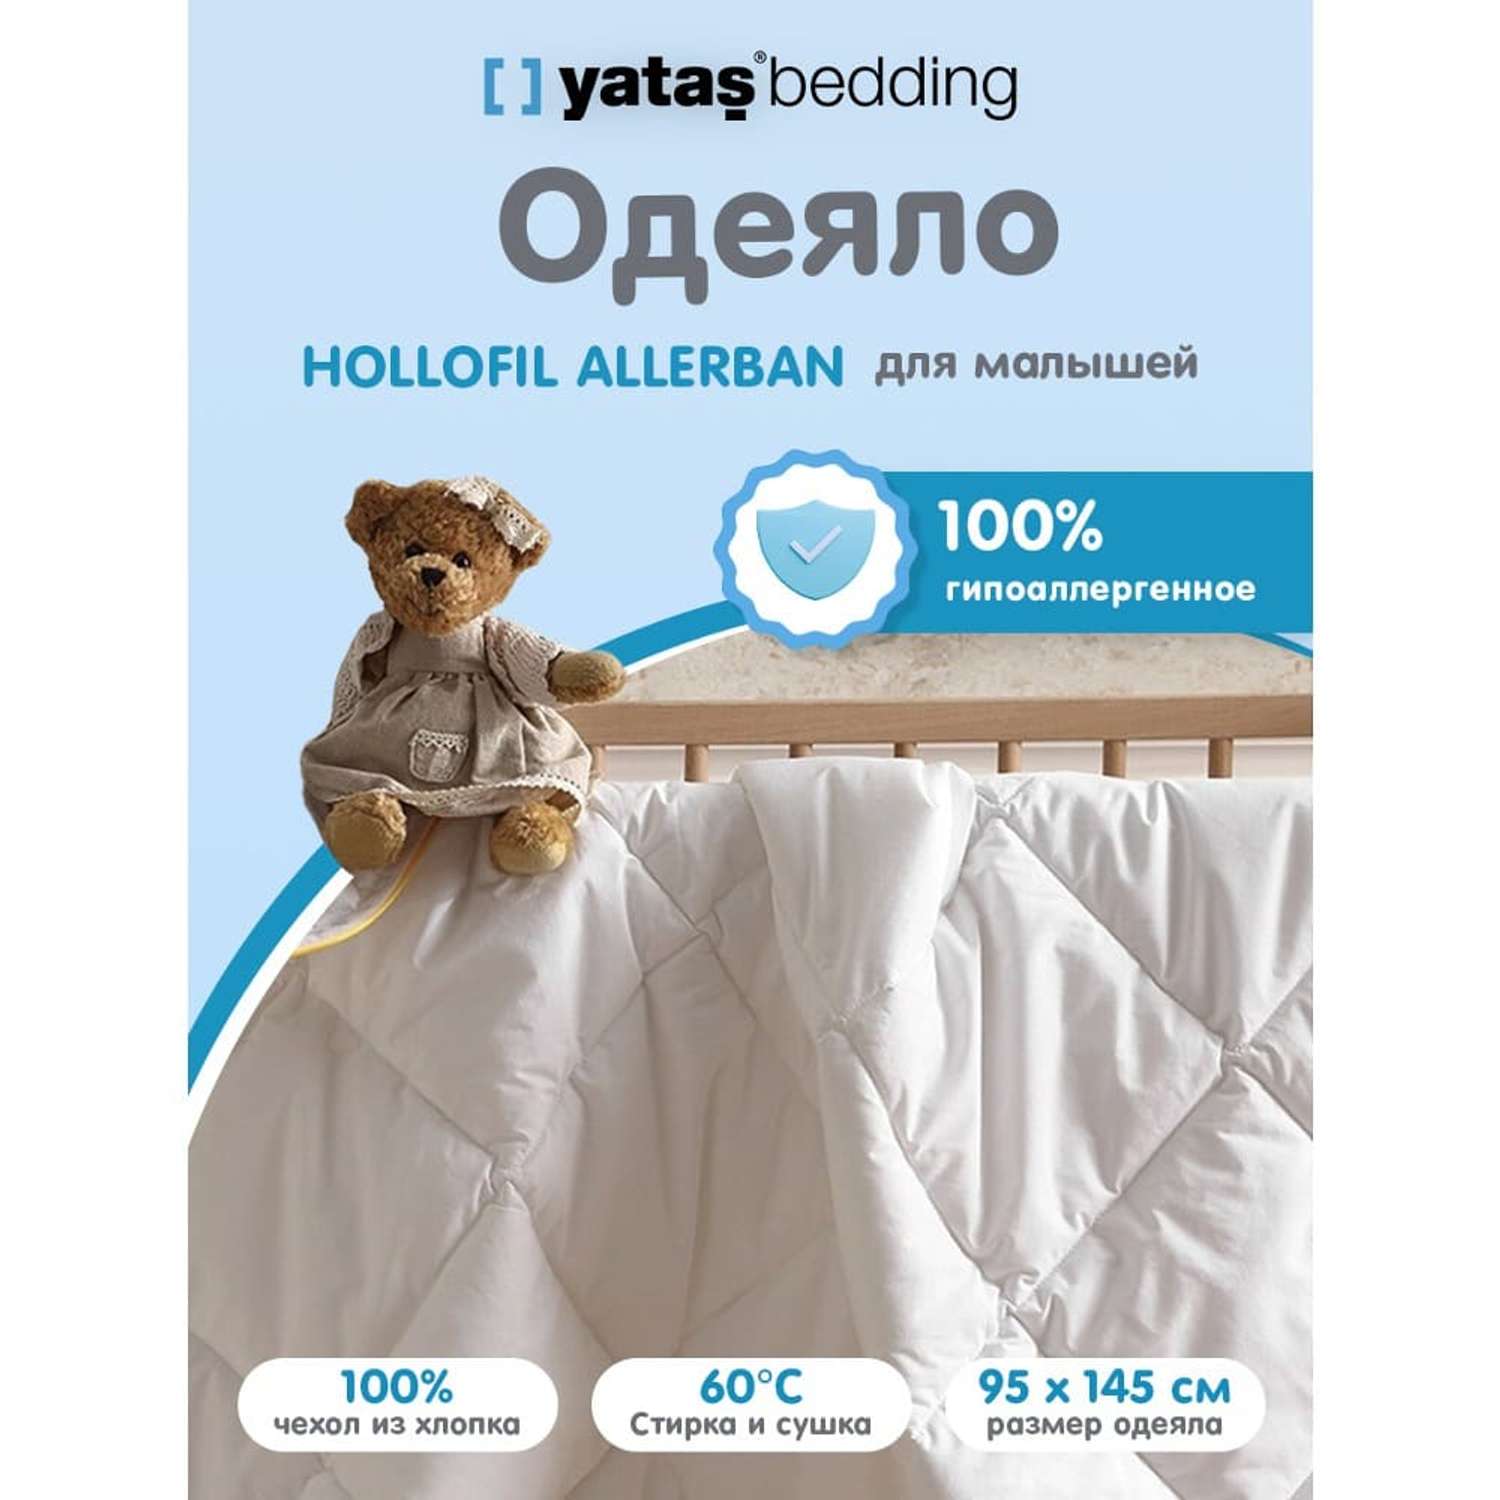 Одеяло детское стеганое Yatas Bedding 95x145 см Dacron Hollofil Allerban - фото 2